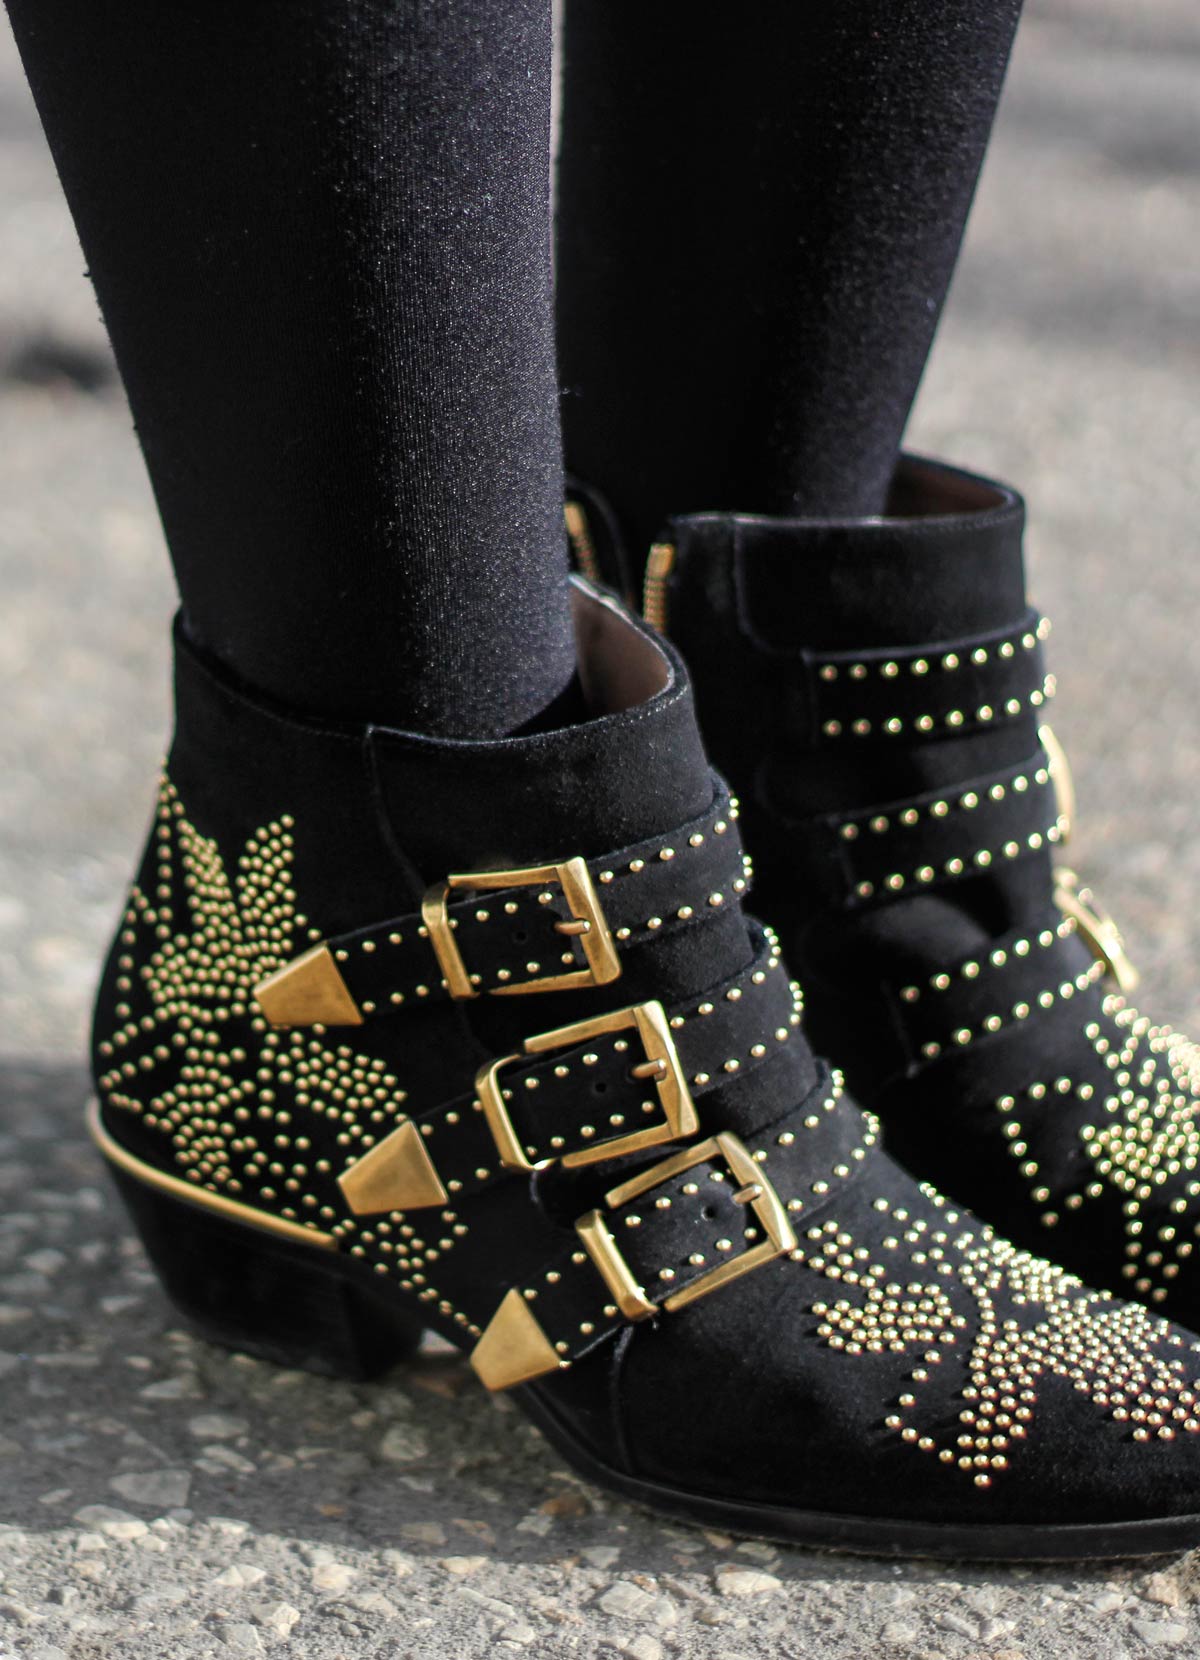 Chloe Susanna Black Studded Suede Boots